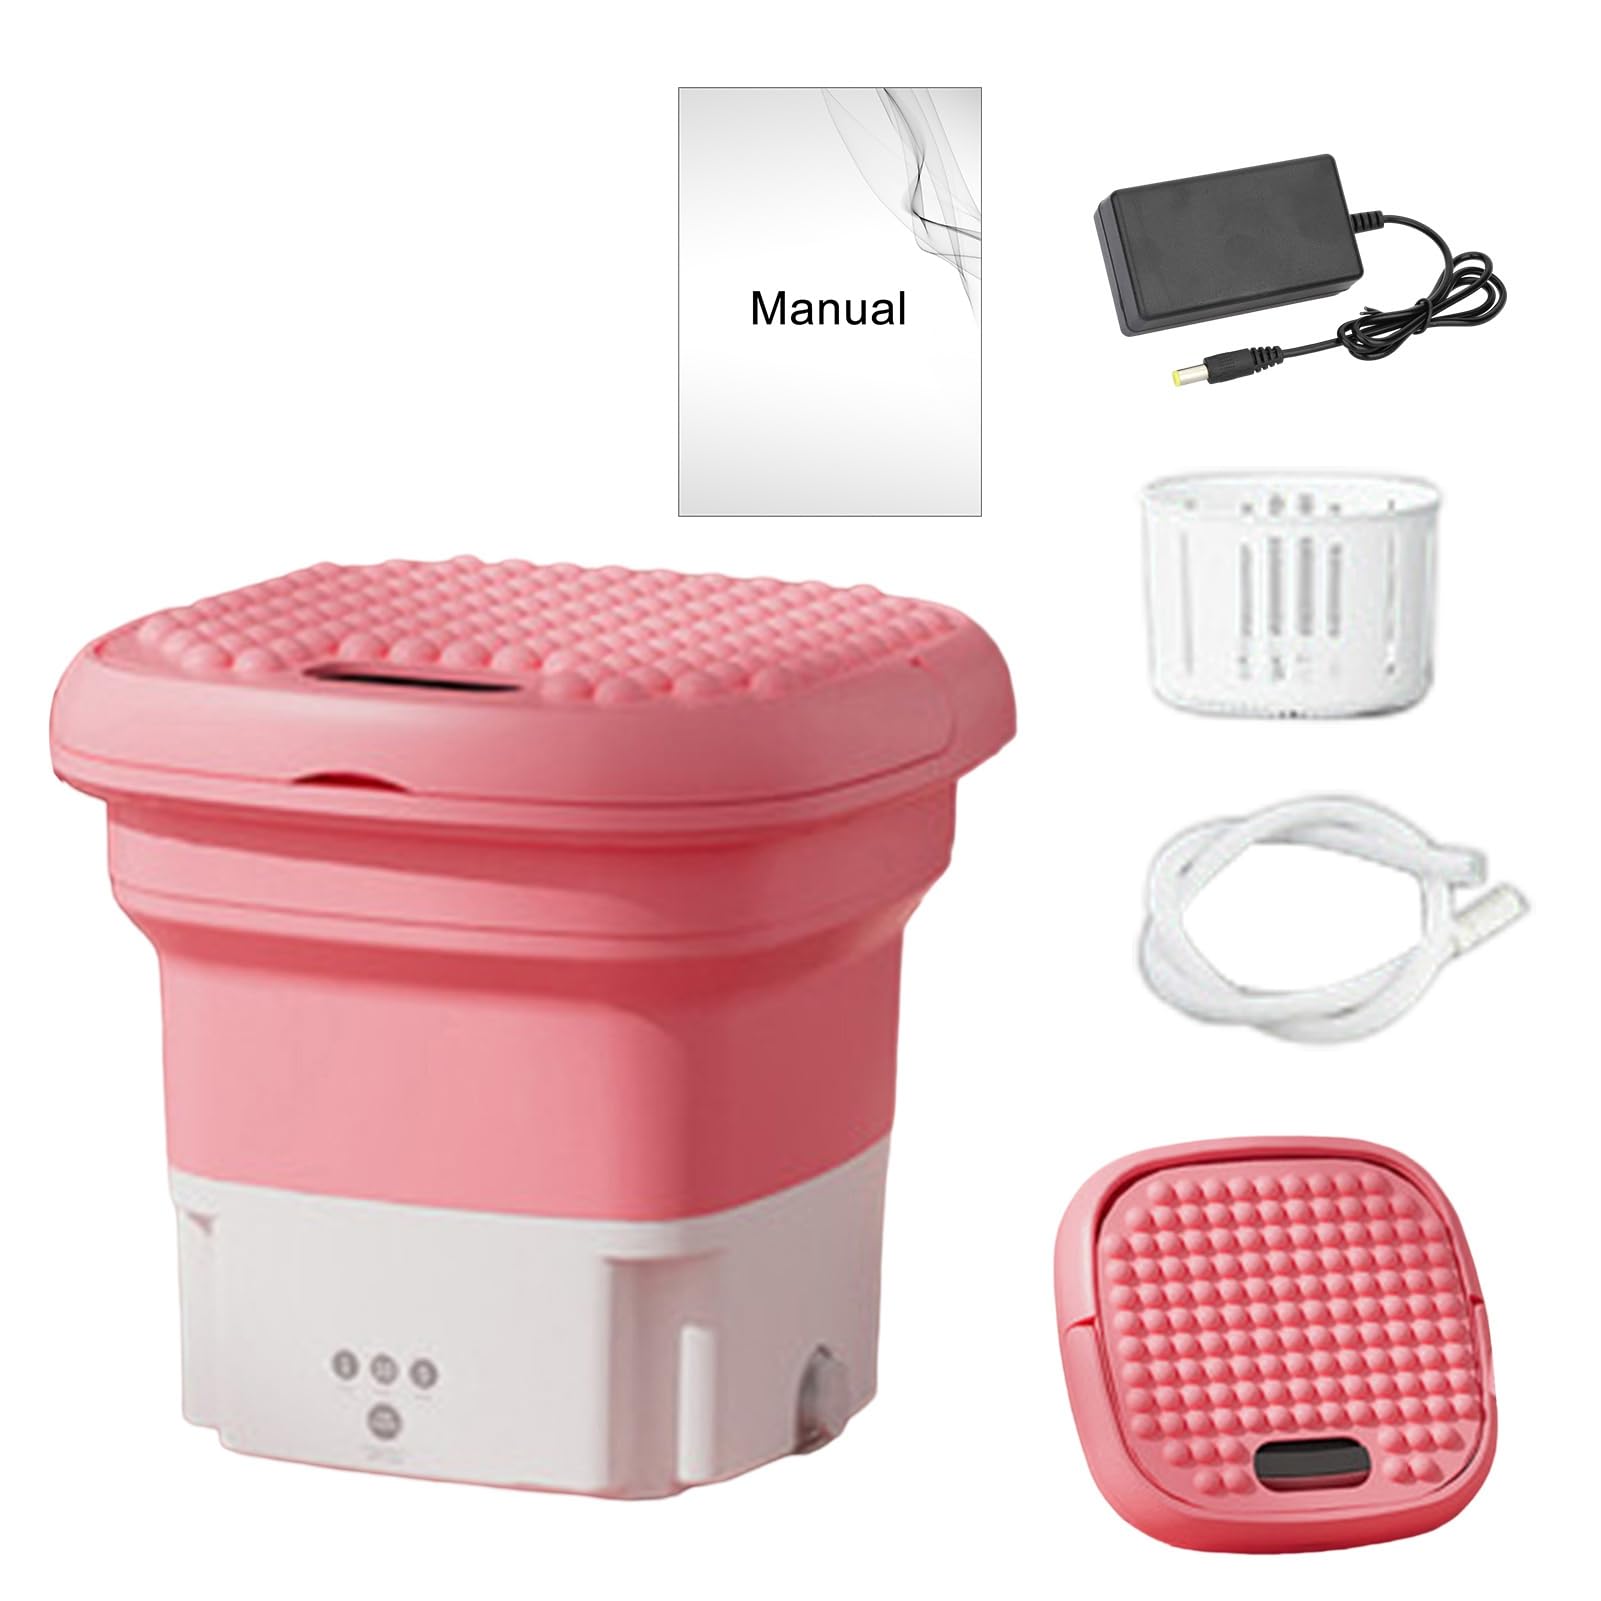 Shienfir 6.5L Tragbare klappbare Waschmaschine, Mini-Waschmaschine Geräuscharmes Energiesparen für Socken Babykleidung Tragbare Waschmaschine Badezimmerzubehör Rosa